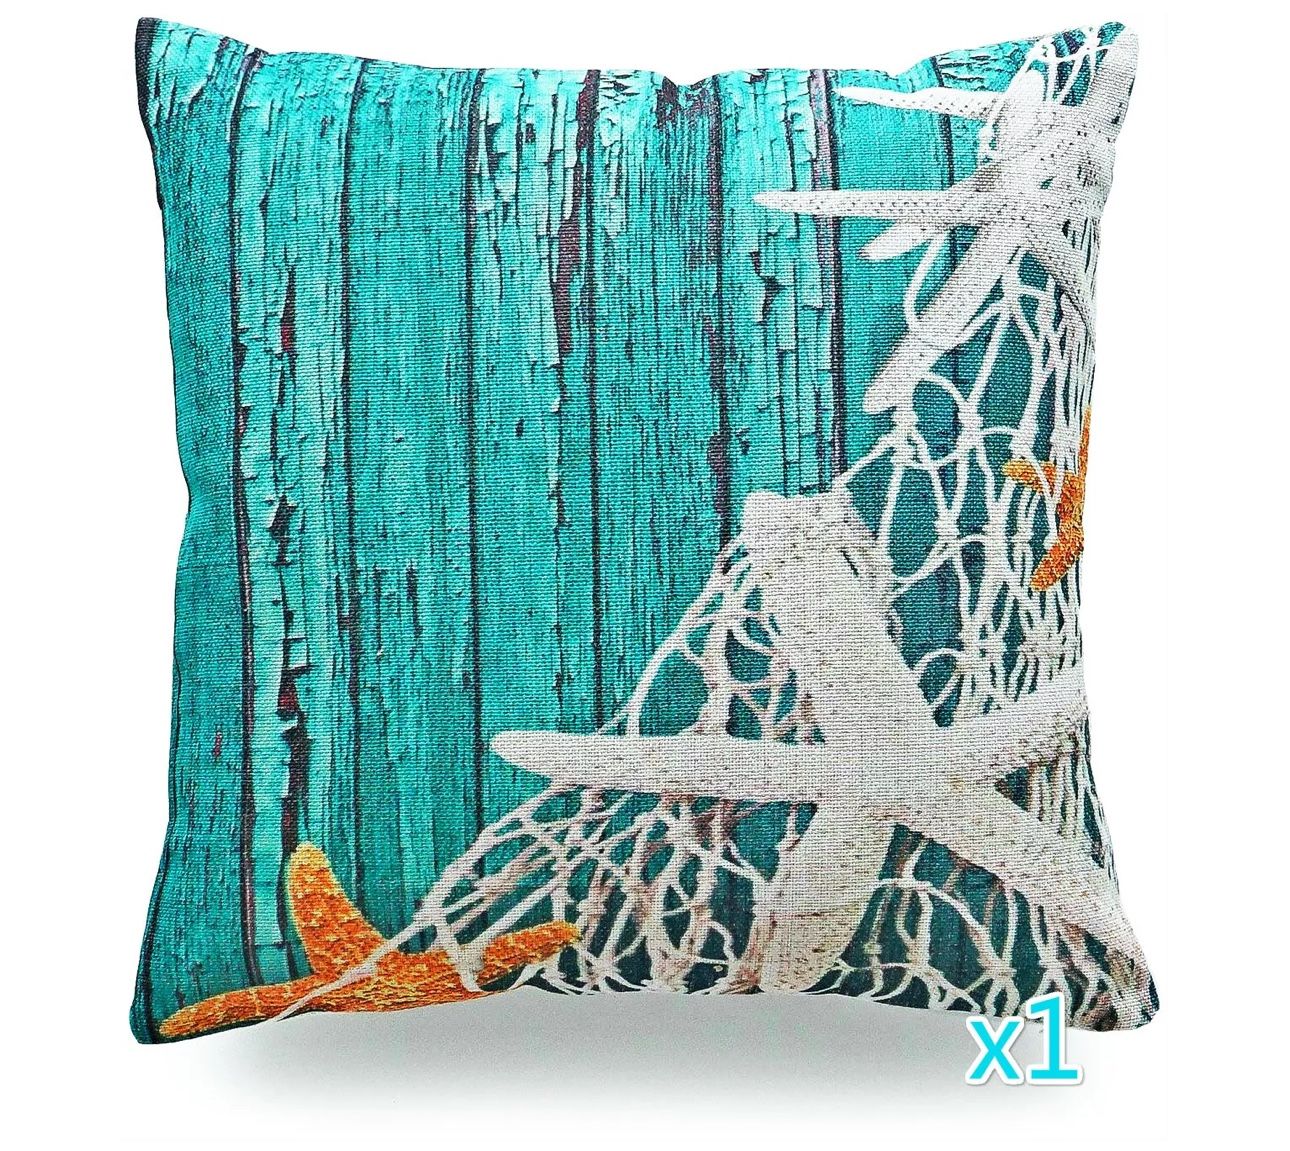 Hofdeco Pillow Cover HEAVY WEIGHT Cotton Linen Starfish Netting Beach 18"x18